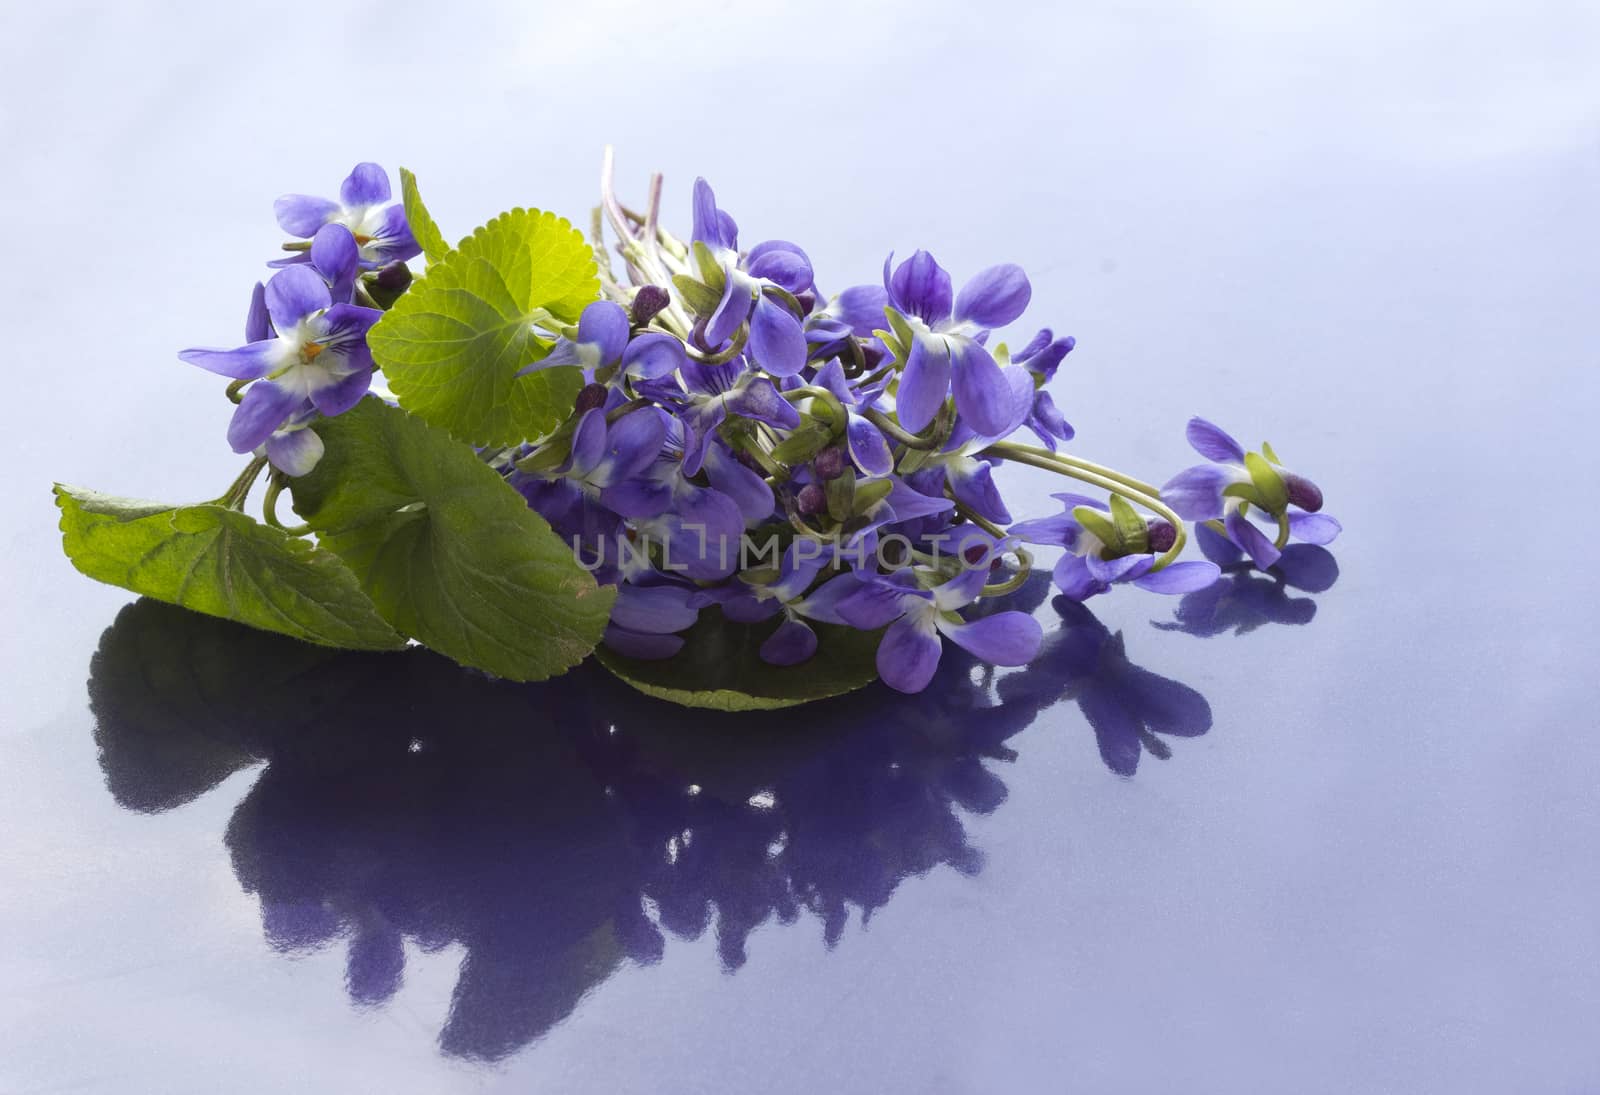 Close-up of a bouquet of violets